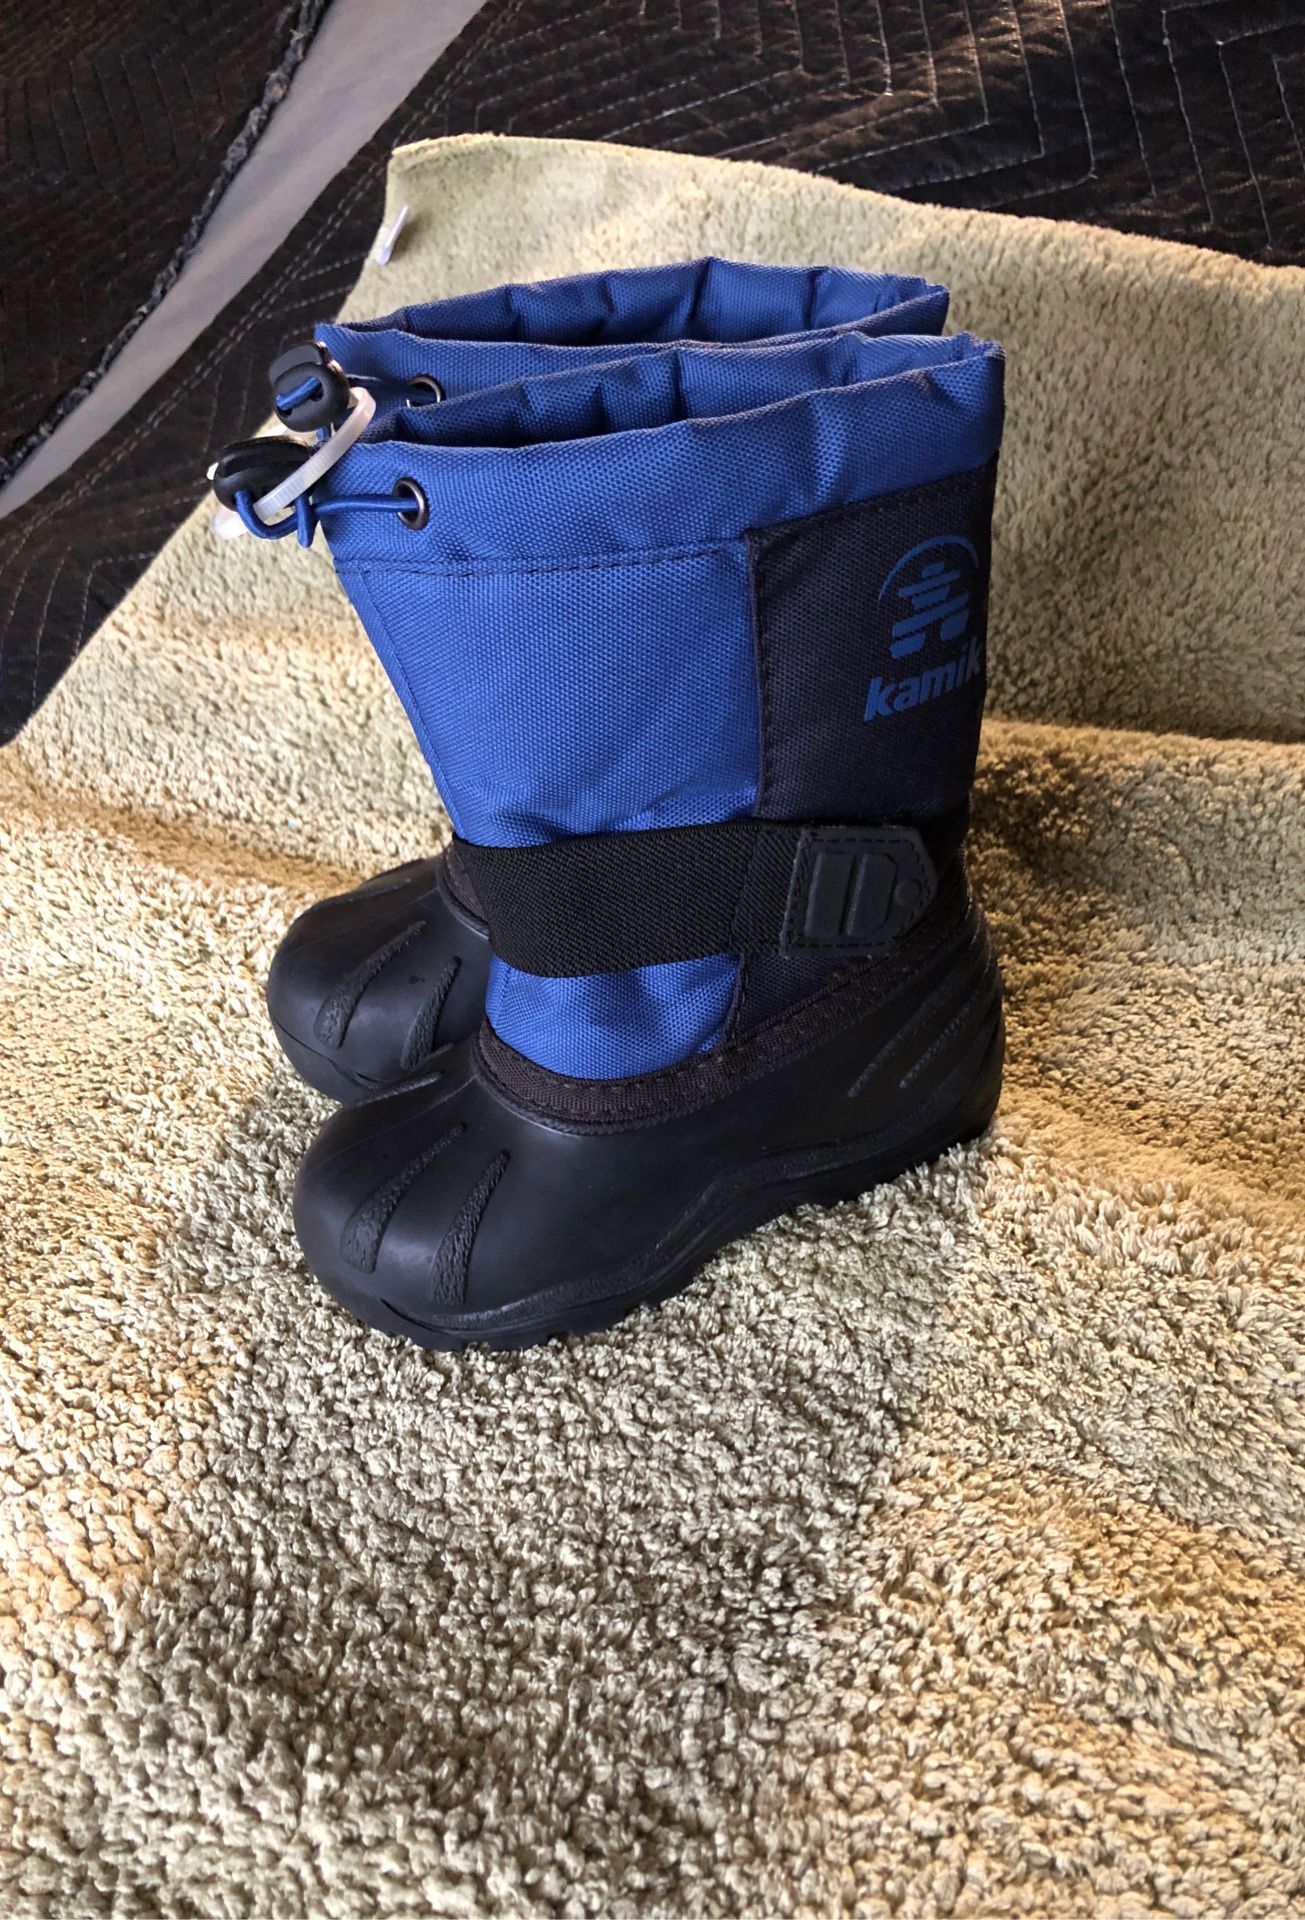 Kamik kids snow boots size 9